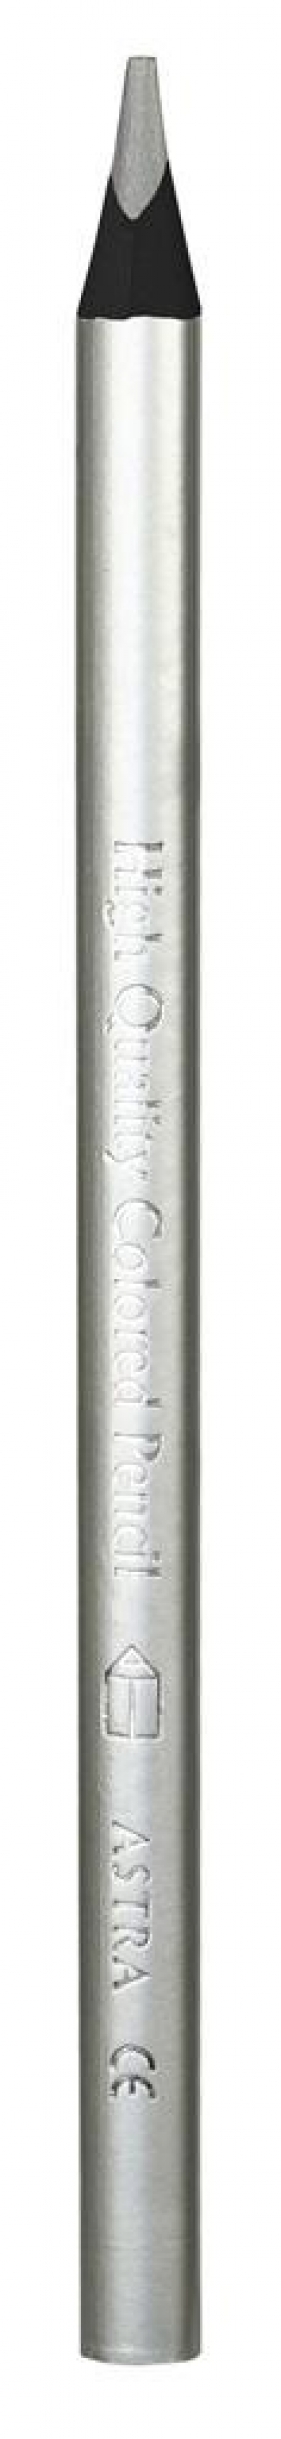 Kredka Jumbo ołówkowa srebrna (24szt) ASTRA